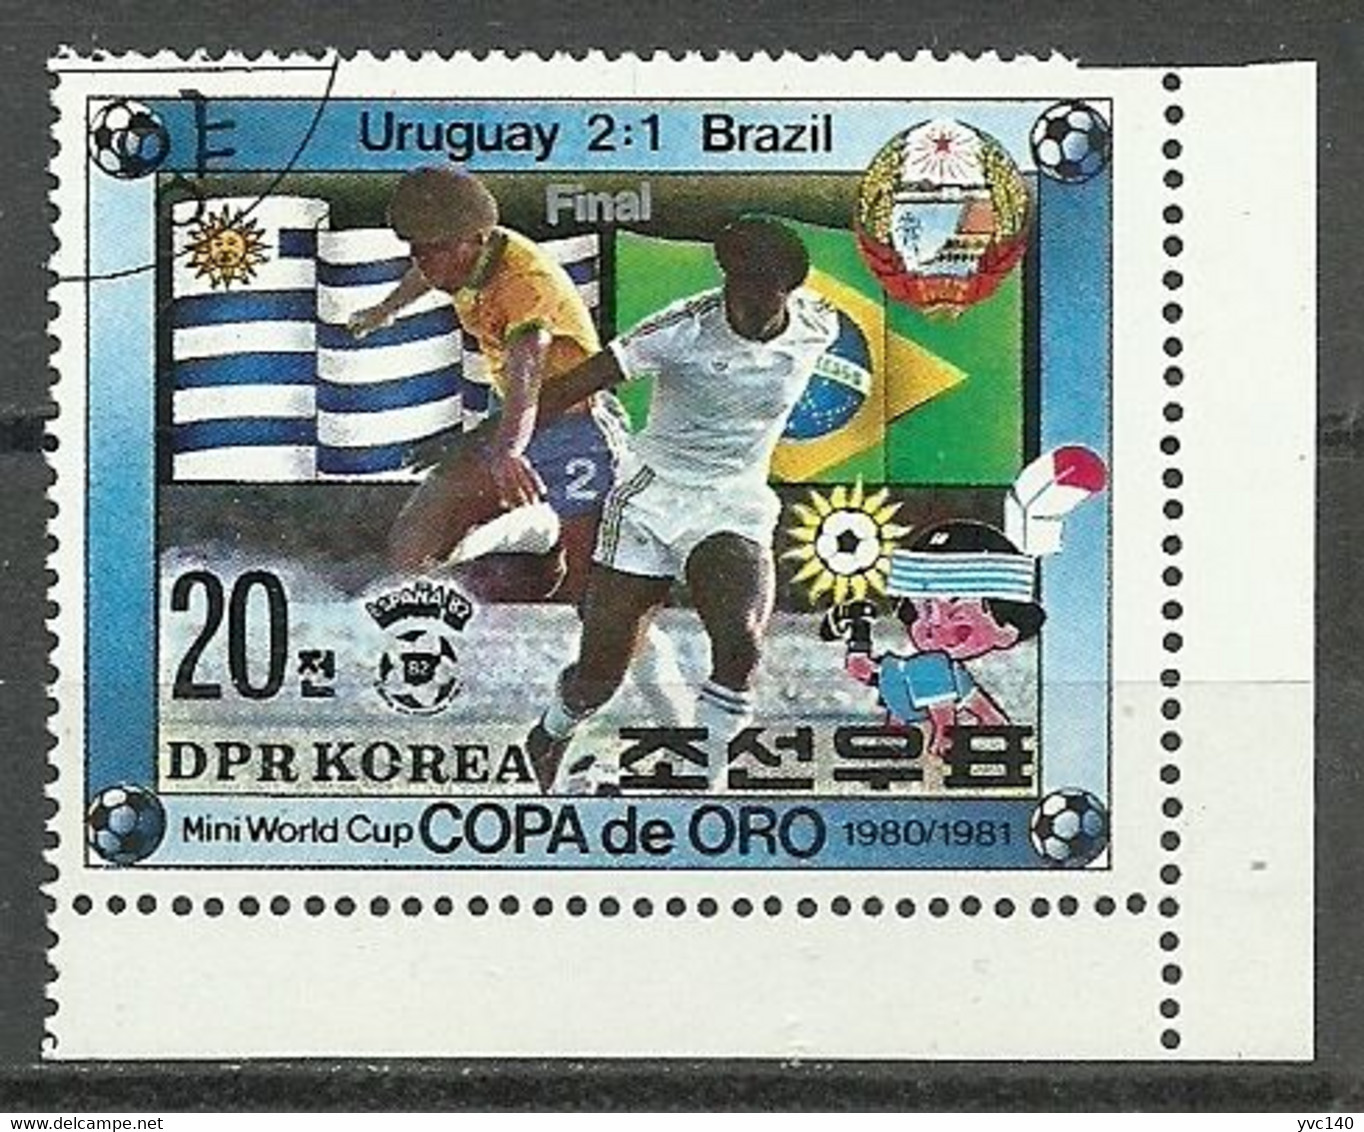 North Korea; Uruguay-Brazil Football Match - Used Stamps